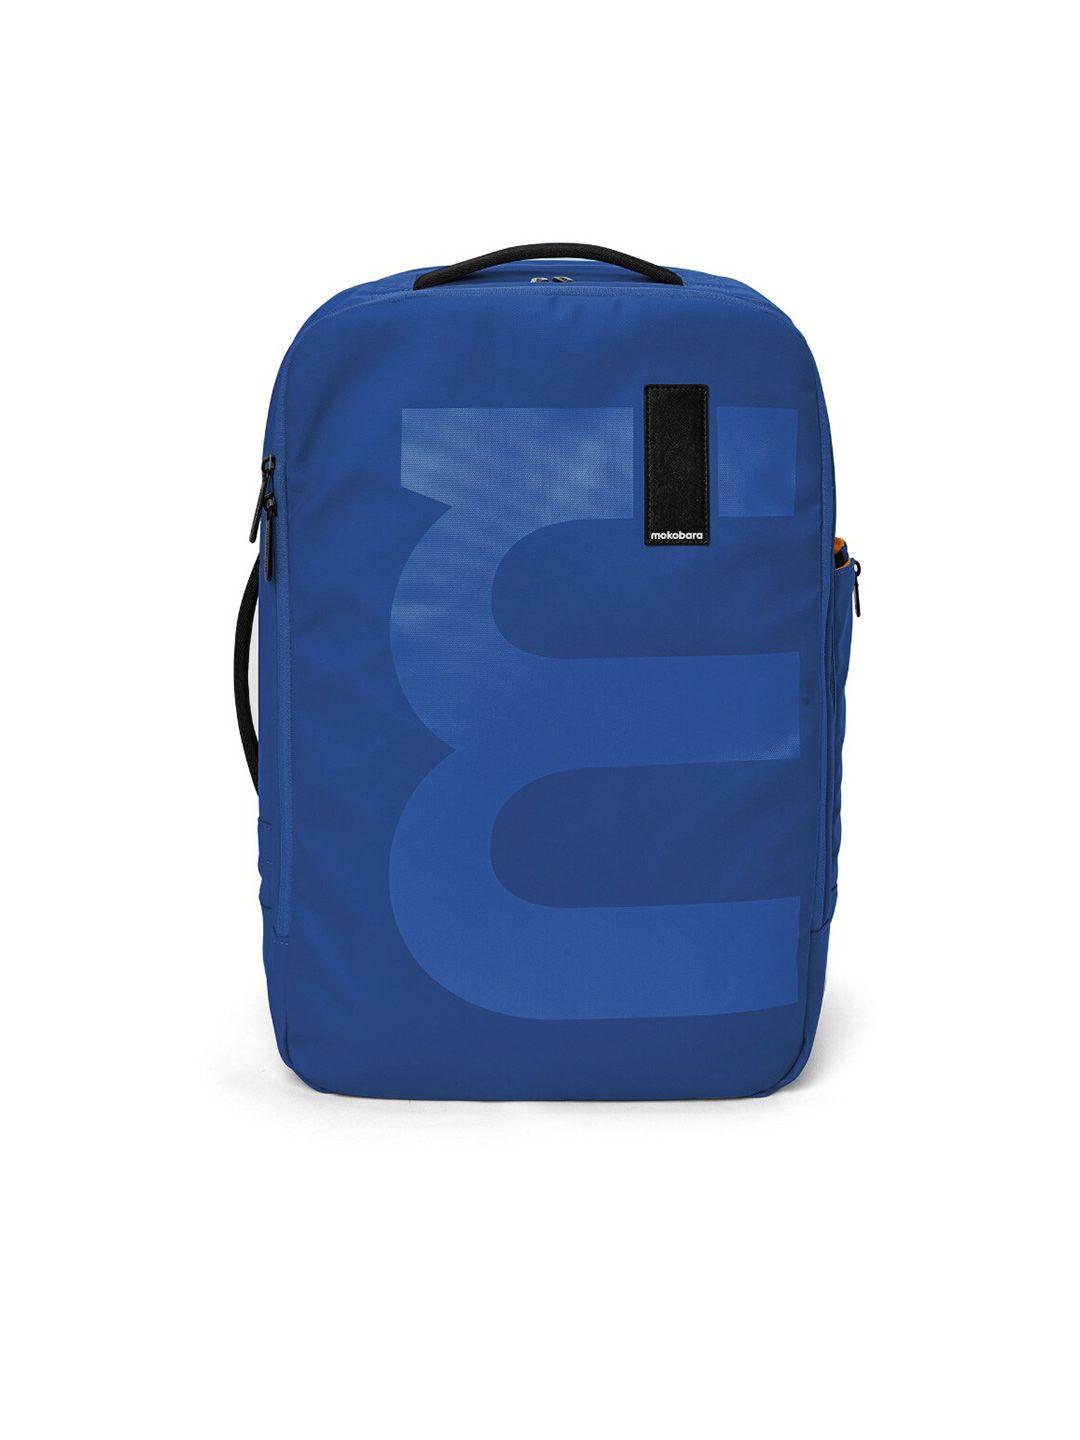 mokobara unisex typography water resistant backpack